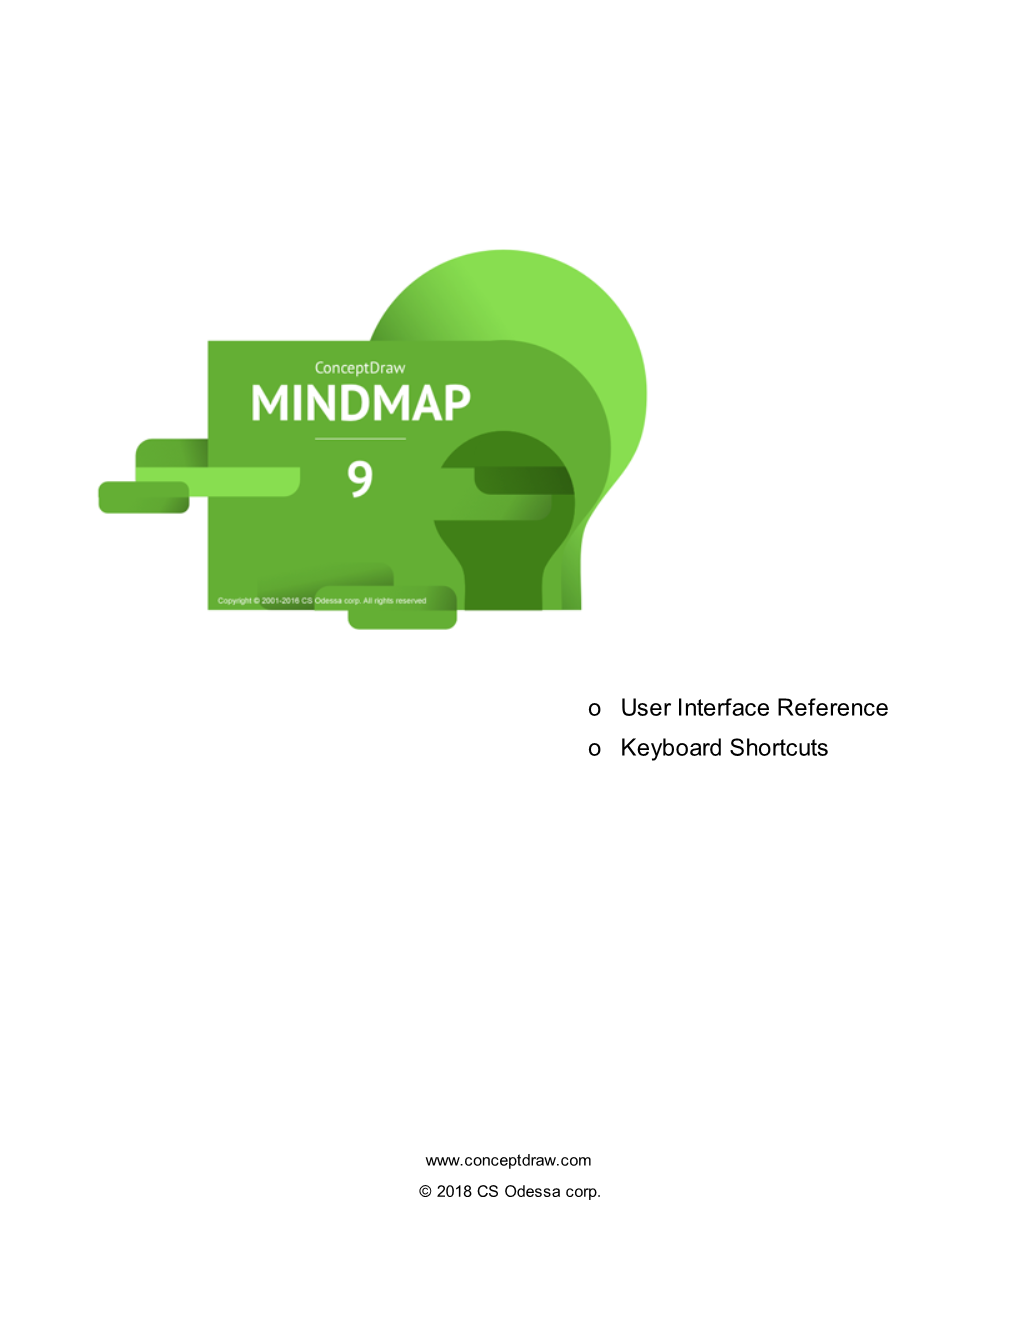 Conceptdraw MINDMAP V9 User Interface Reference